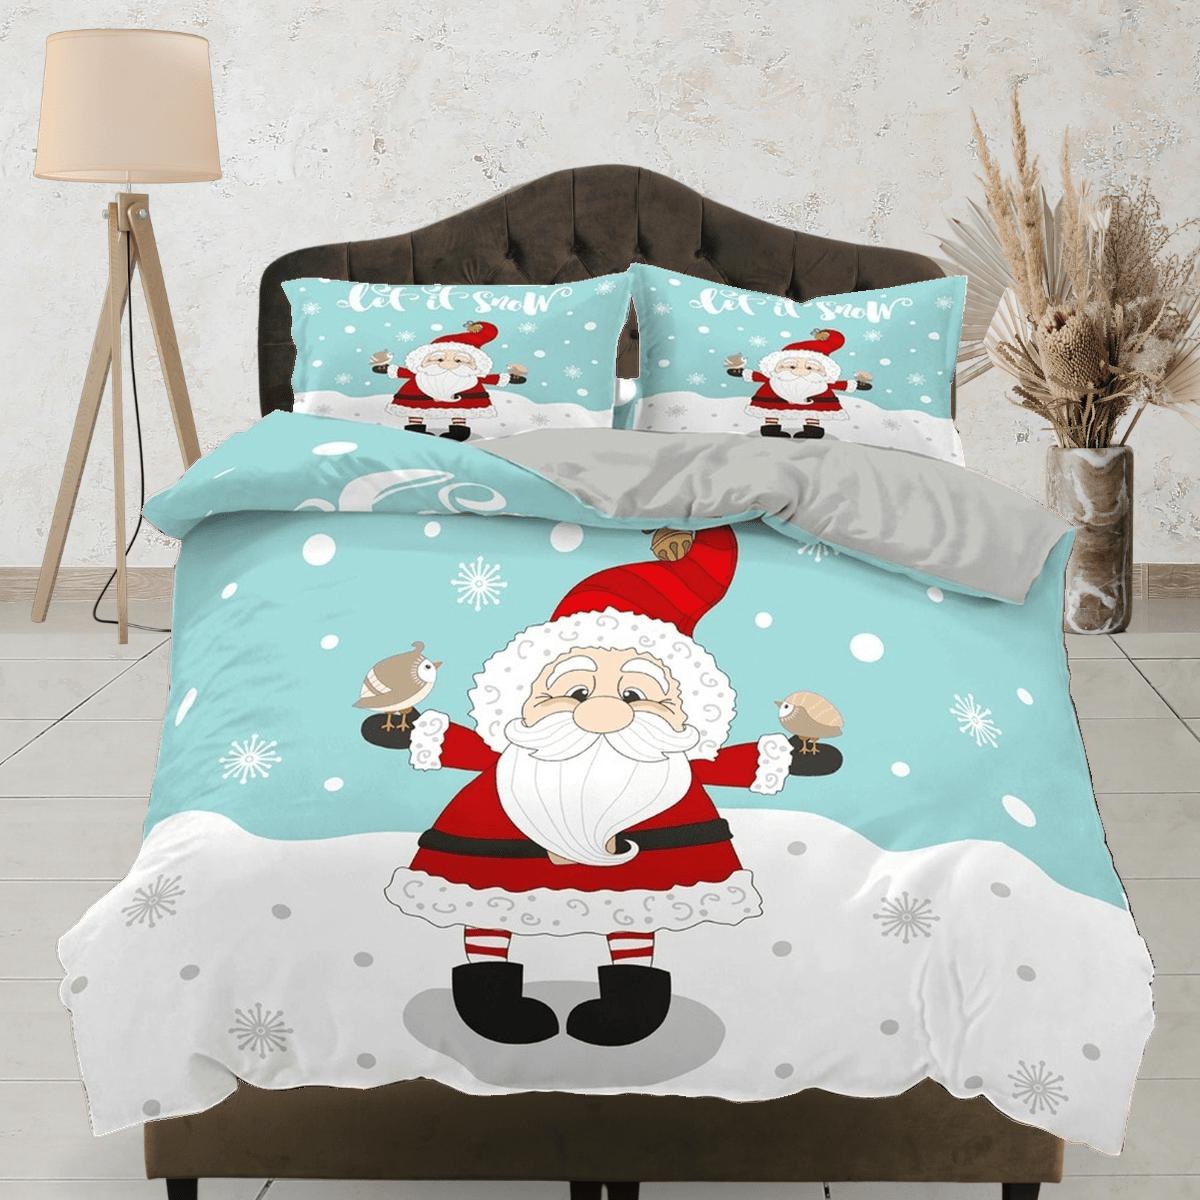 daintyduvet Cute Santa Claus in snow Christmas bedding & pillowcase holiday gift duvet cover king queen full toddler bedding baby Christmas farmhouse